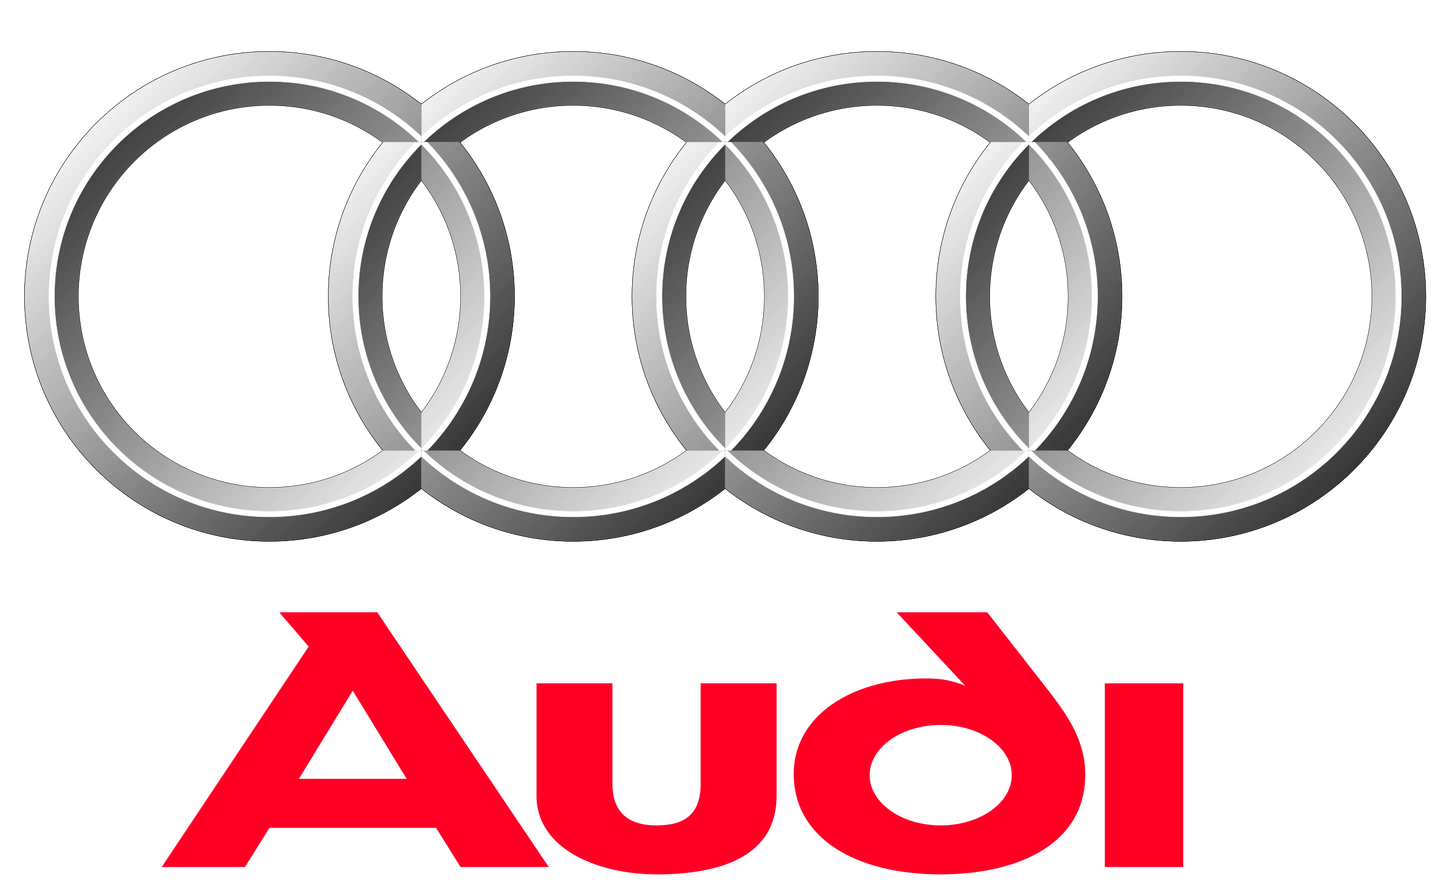 Kód autorádia Audi A4